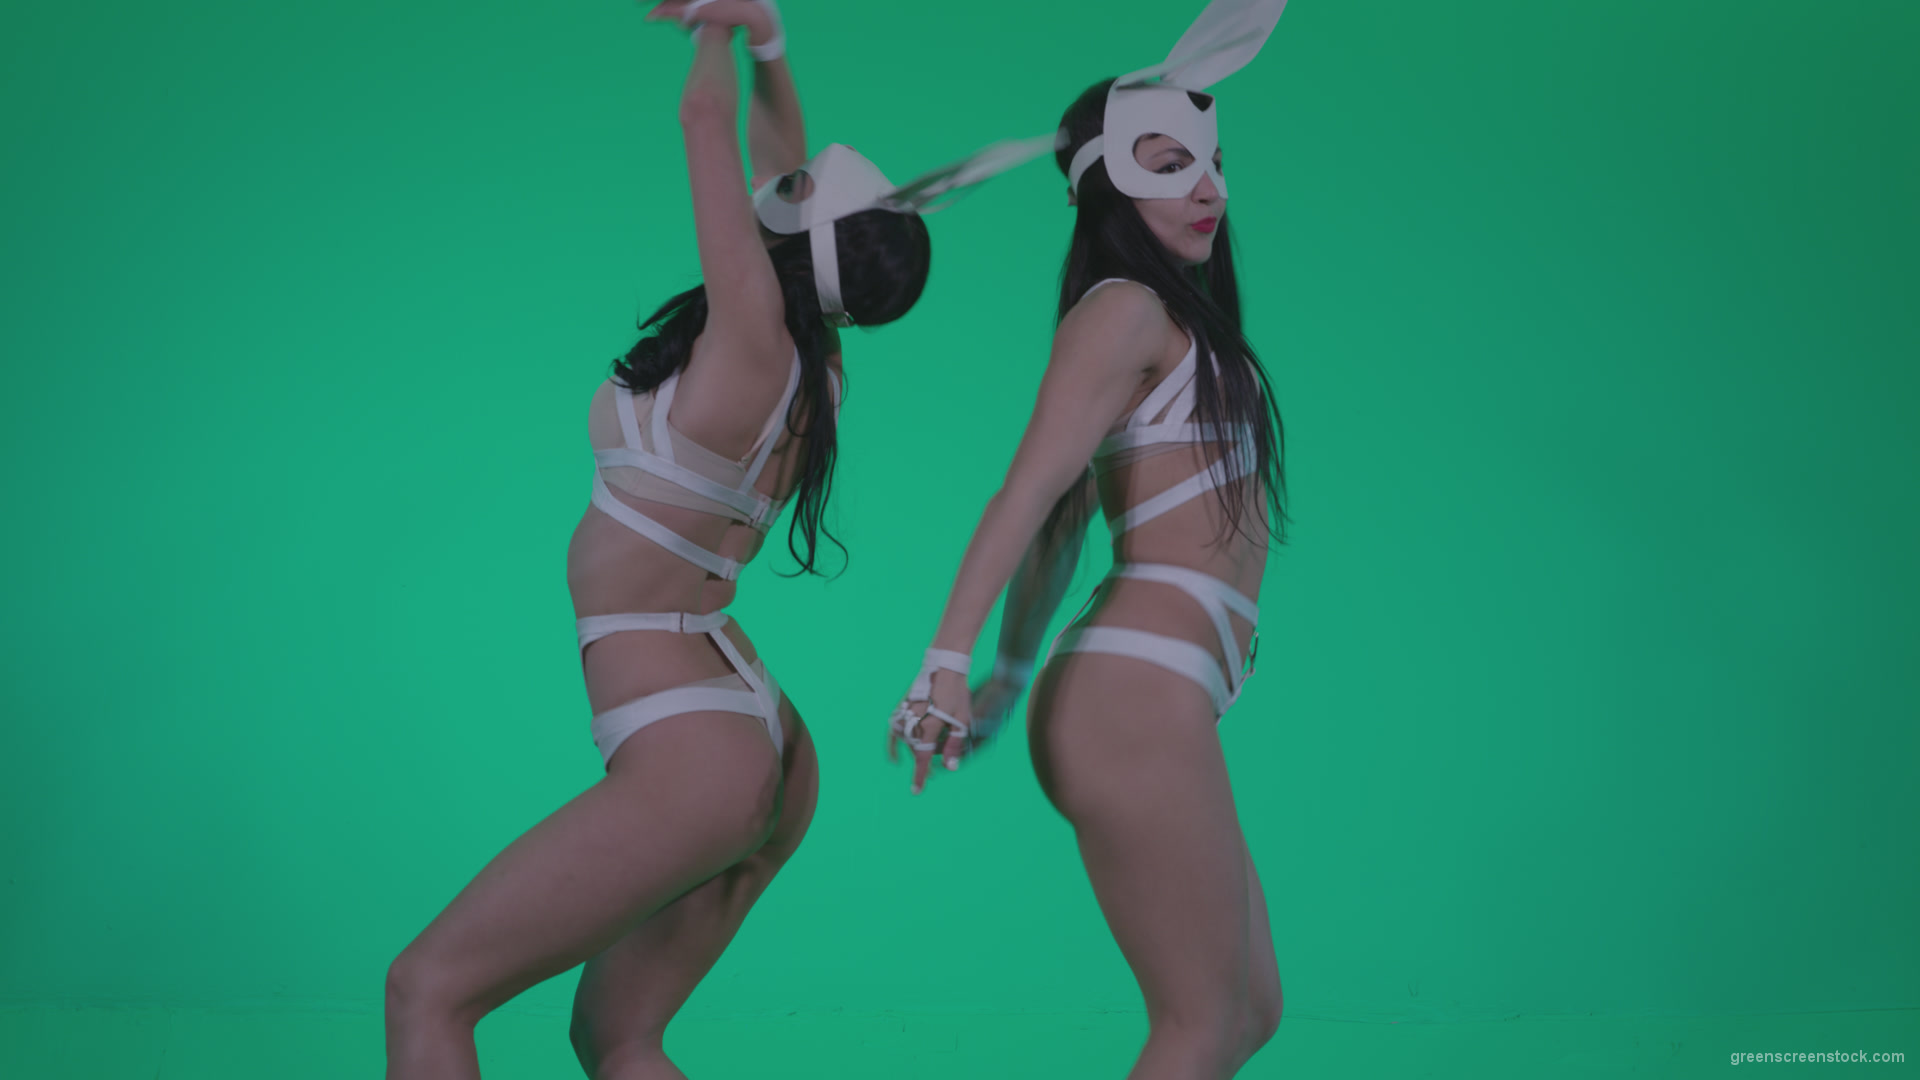 Go-go-Dancer-White-Rabbit-m6-Green-Screen-Video-Footage_004 Green Screen Stock